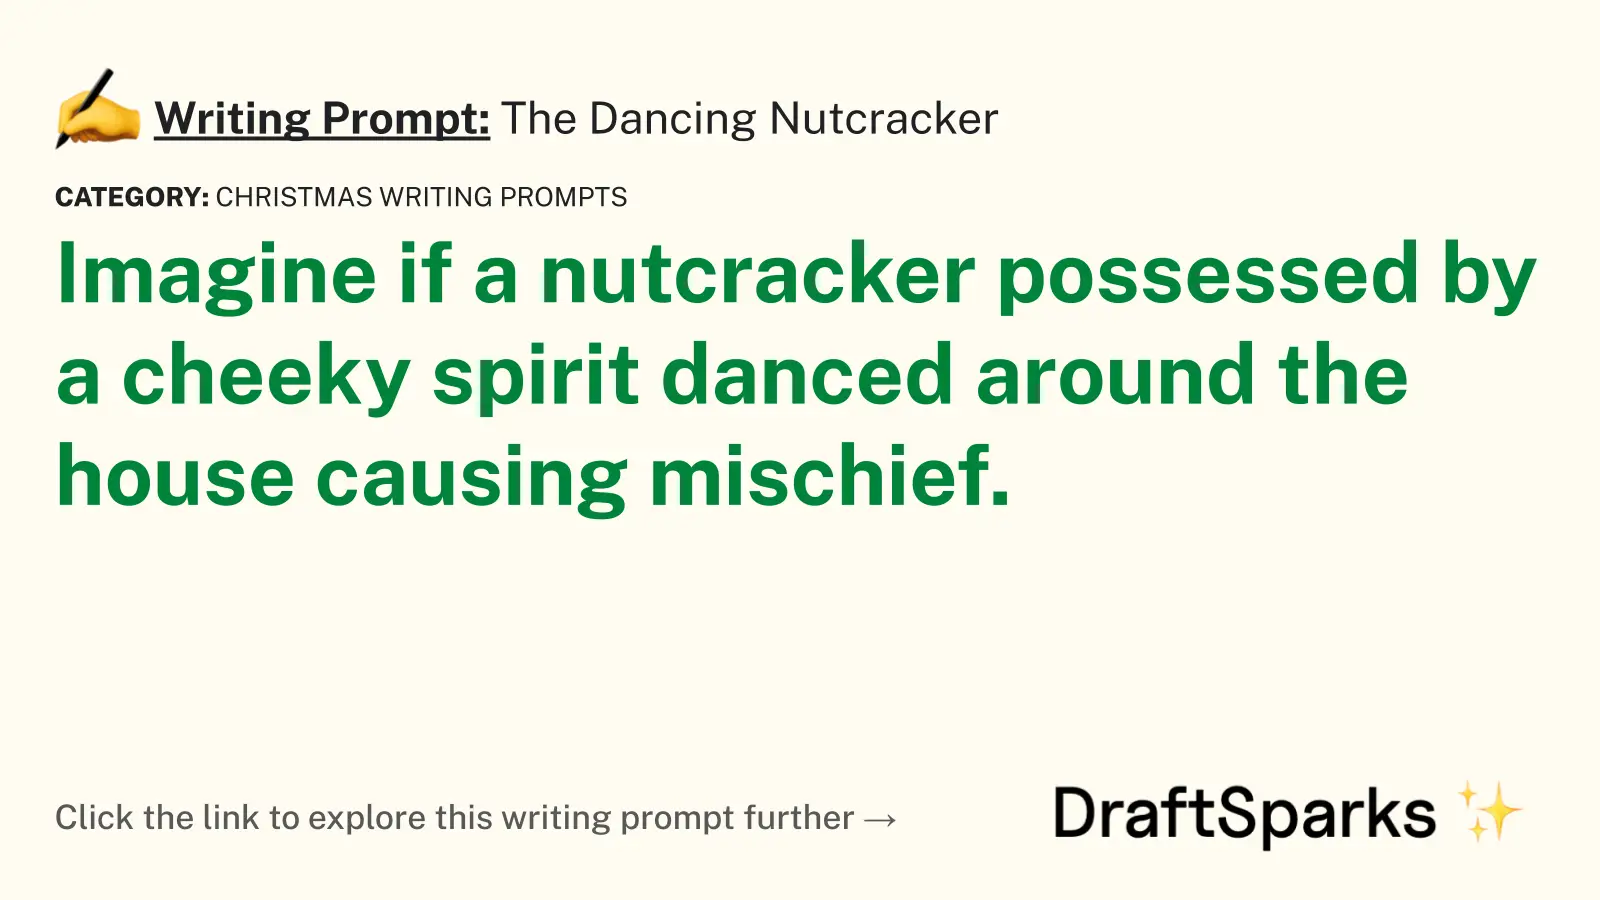 The Dancing Nutcracker